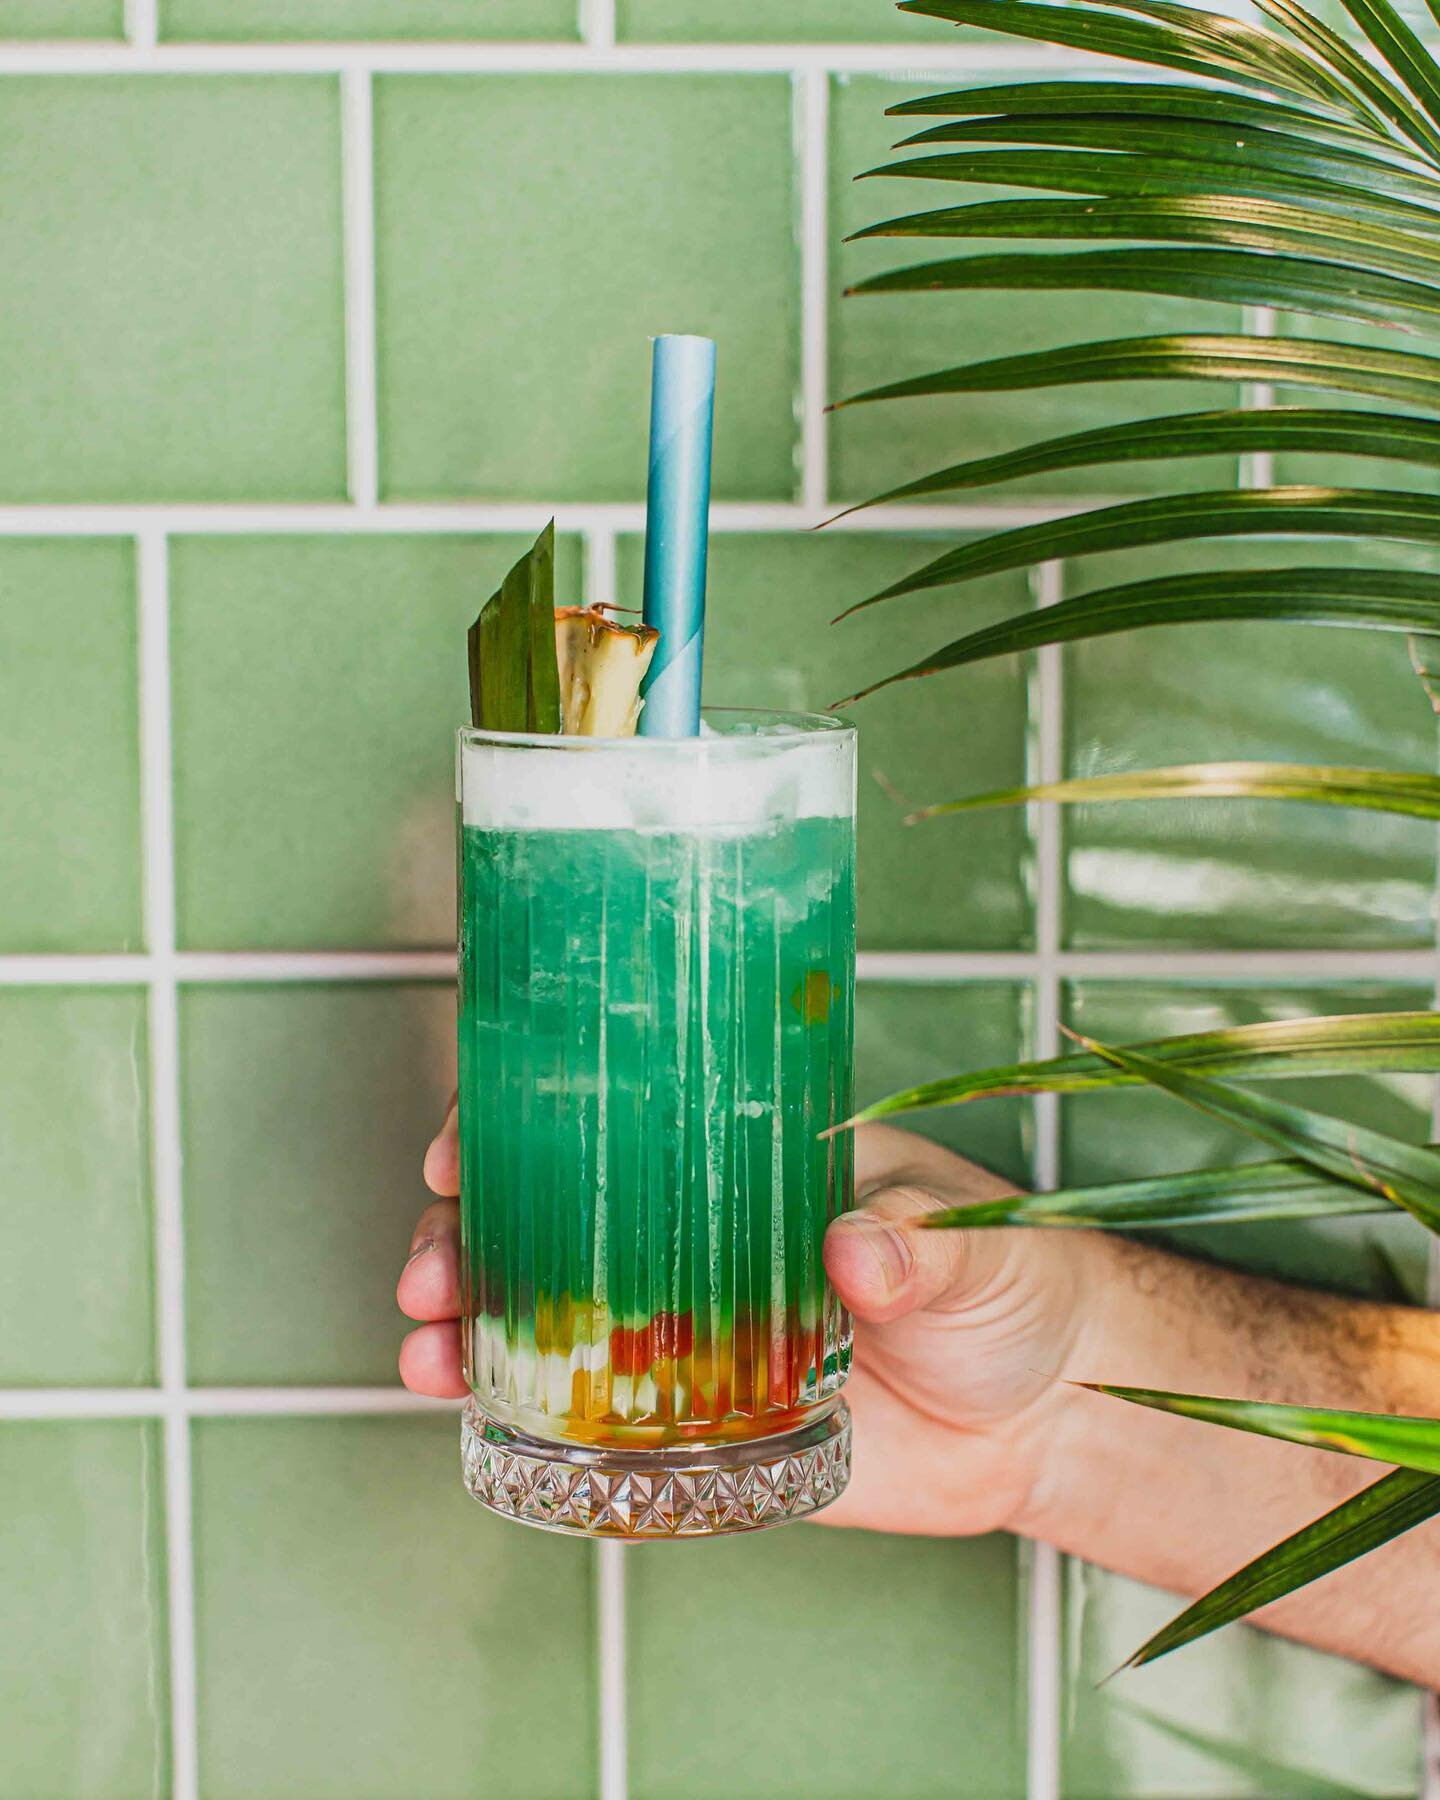 New cocktail 🍹 
Phuket punch 🥊 
Zubrowka biala vodka, vanilla, blue curacao, pineapple juice, rainbow jelly 🥳
#pingpong #thailand #brisbane